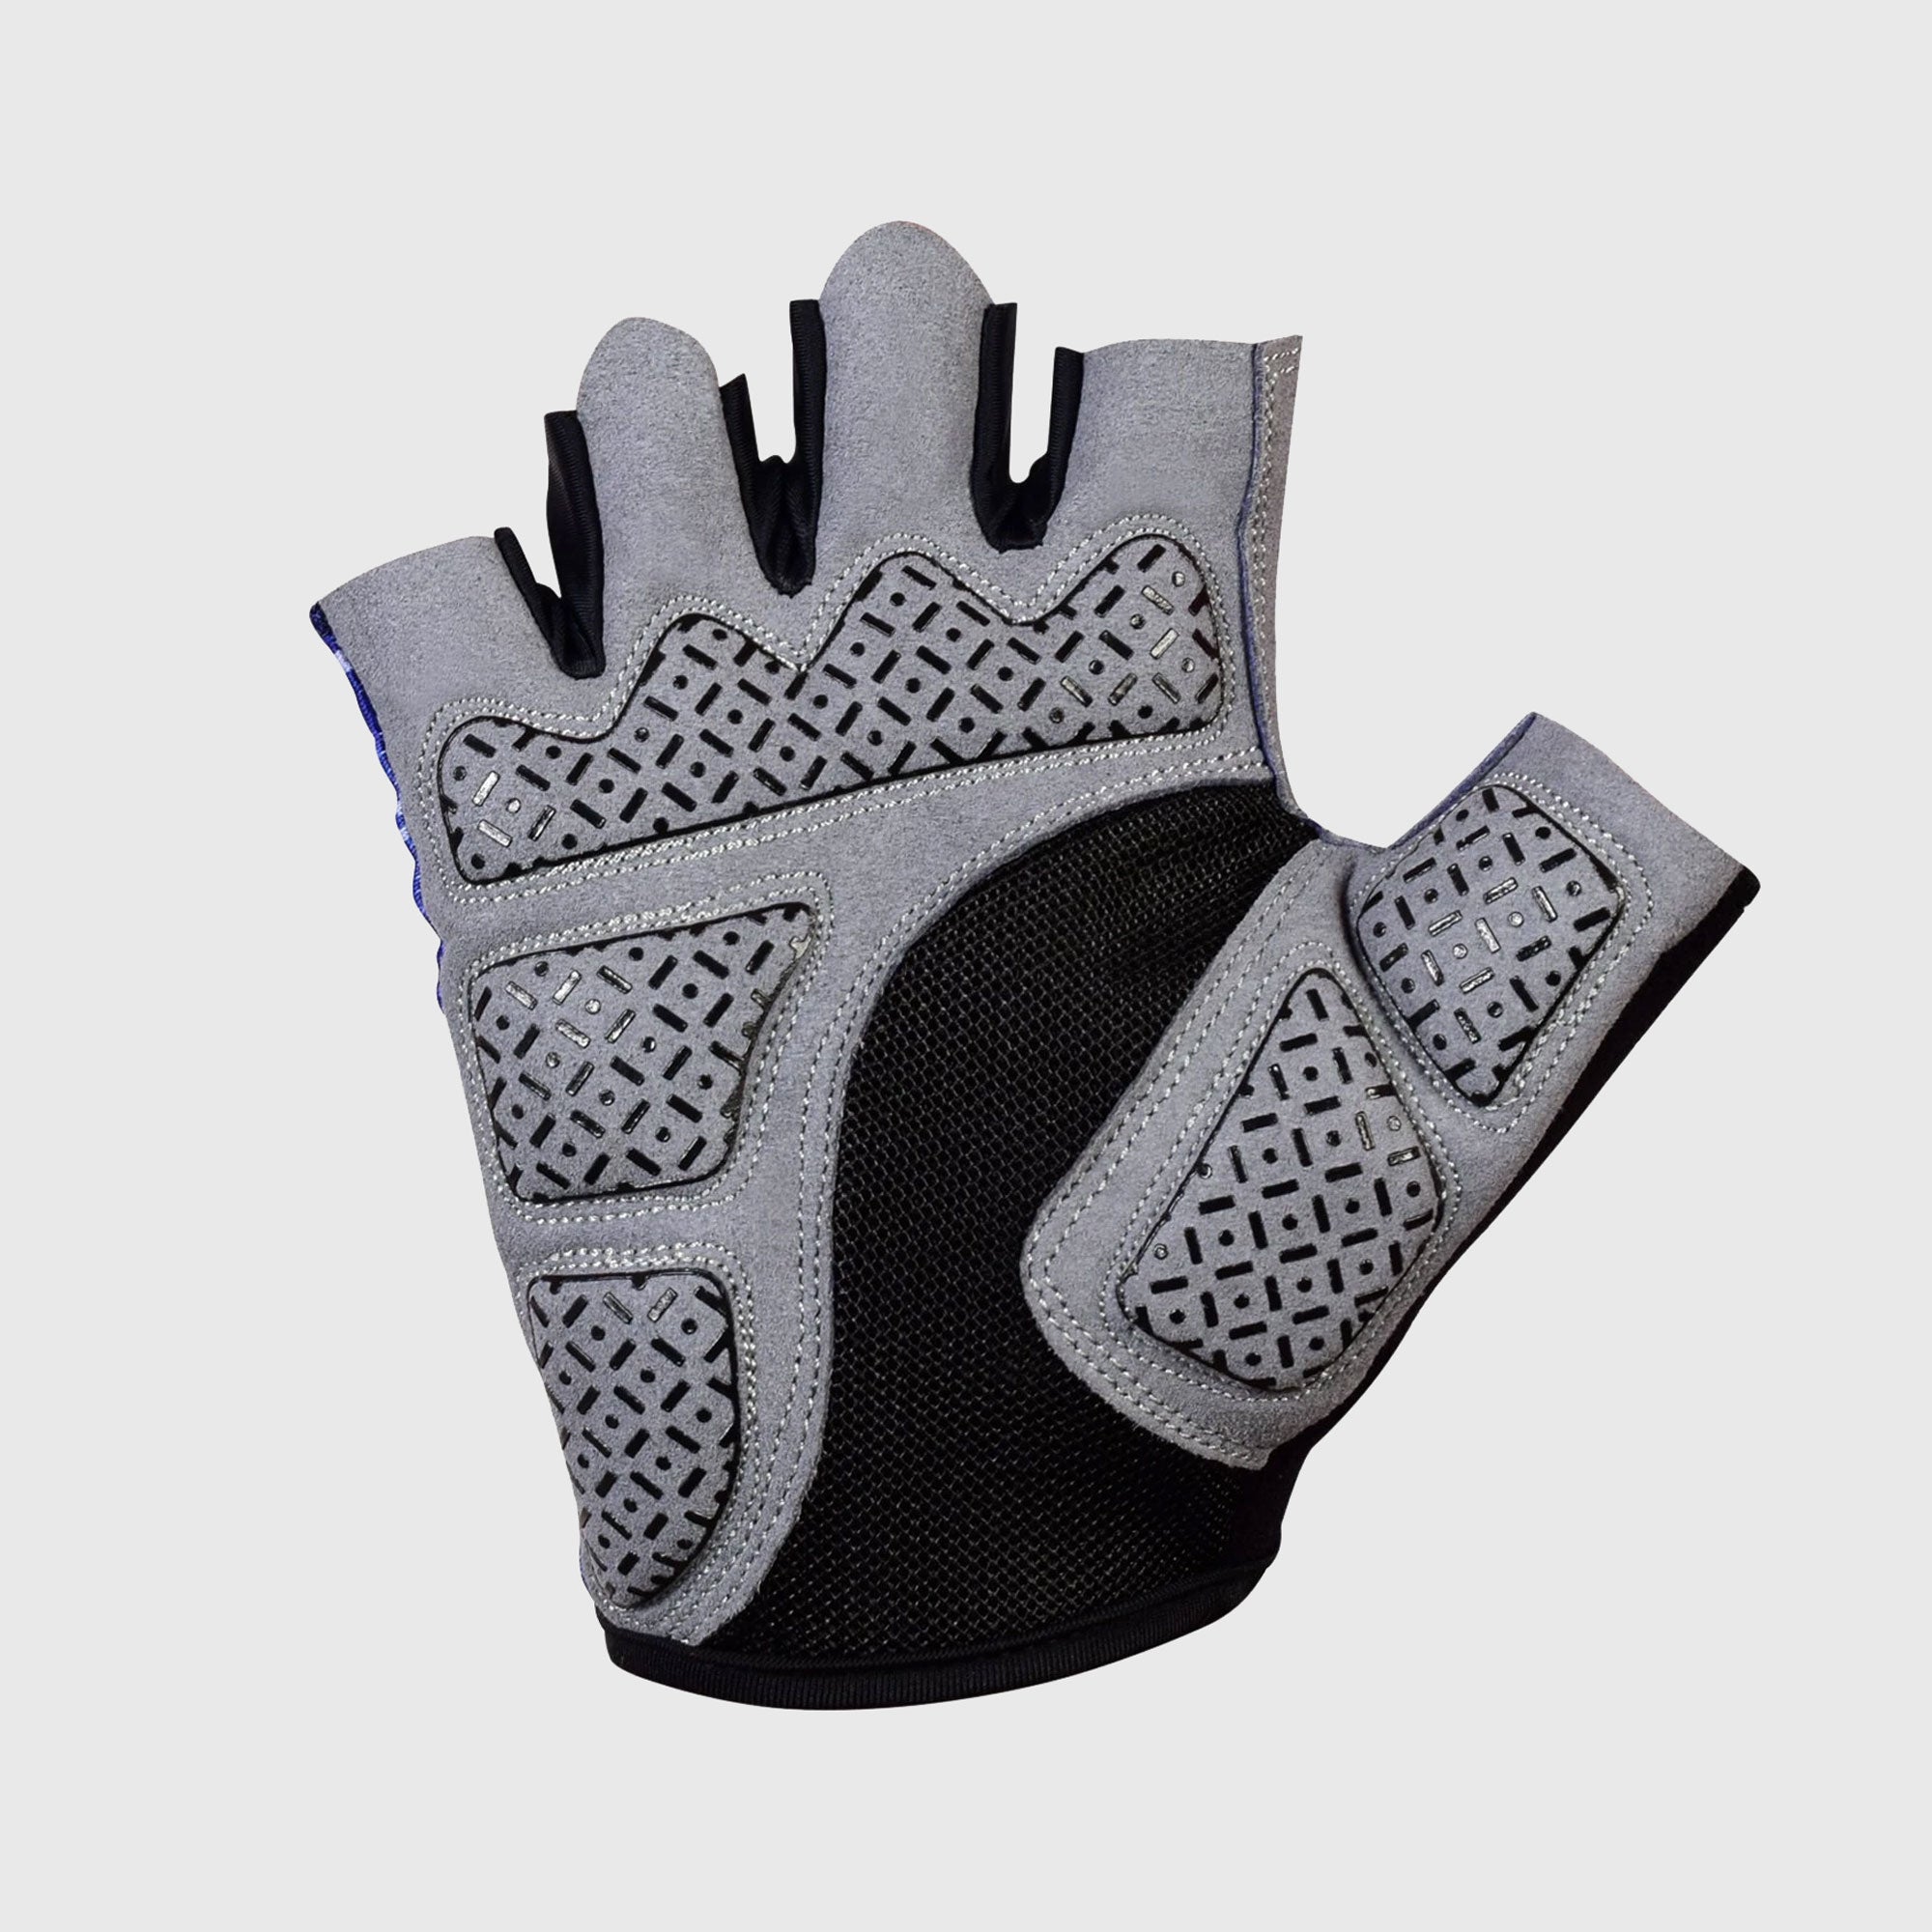 Fdx All Day Green Gel Padded Short Finger Summer Cycling Gloves